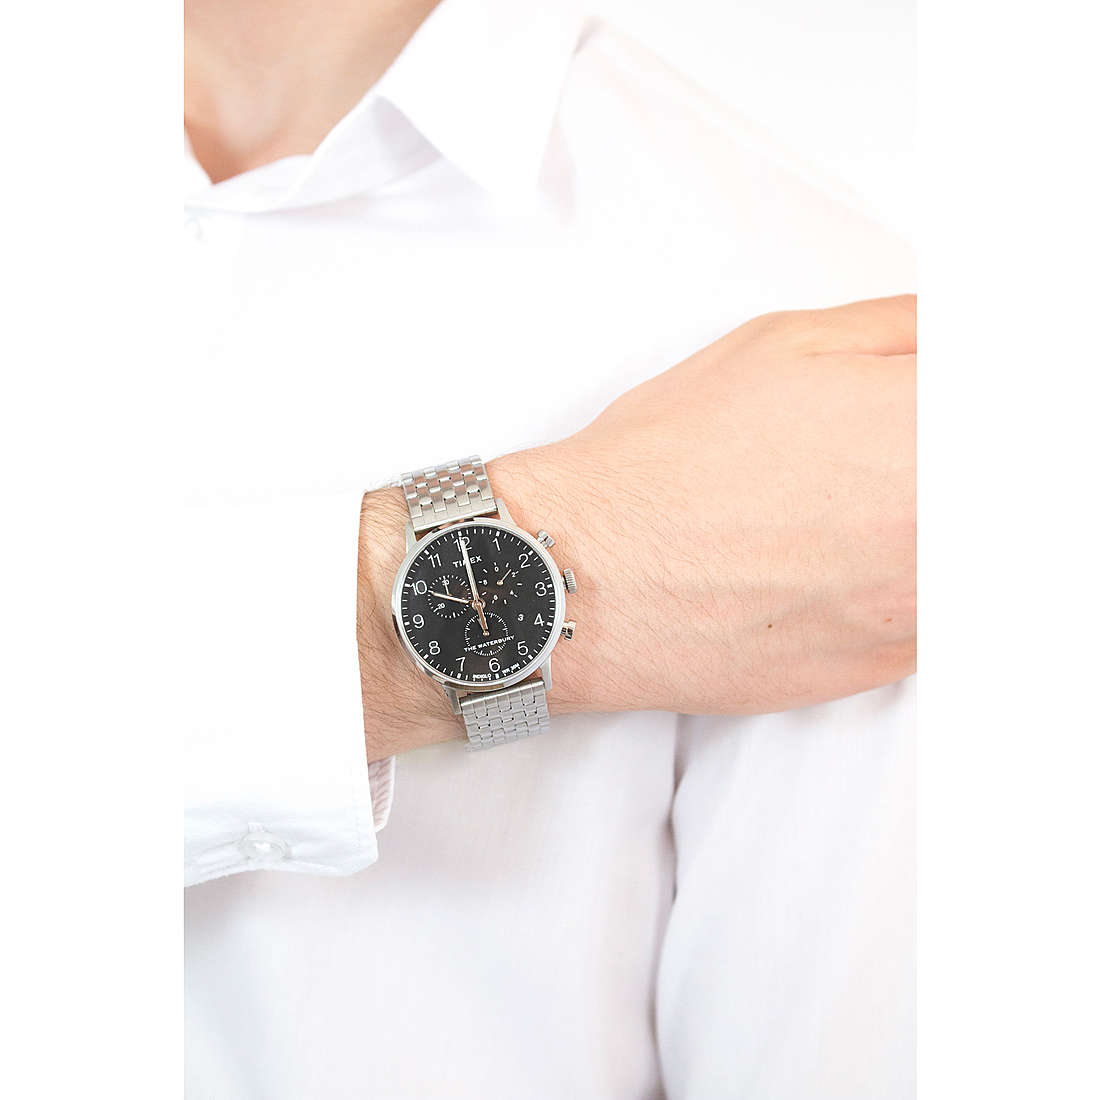 Timex cronografi Waterbury Collection uomo TW2R71900 indosso